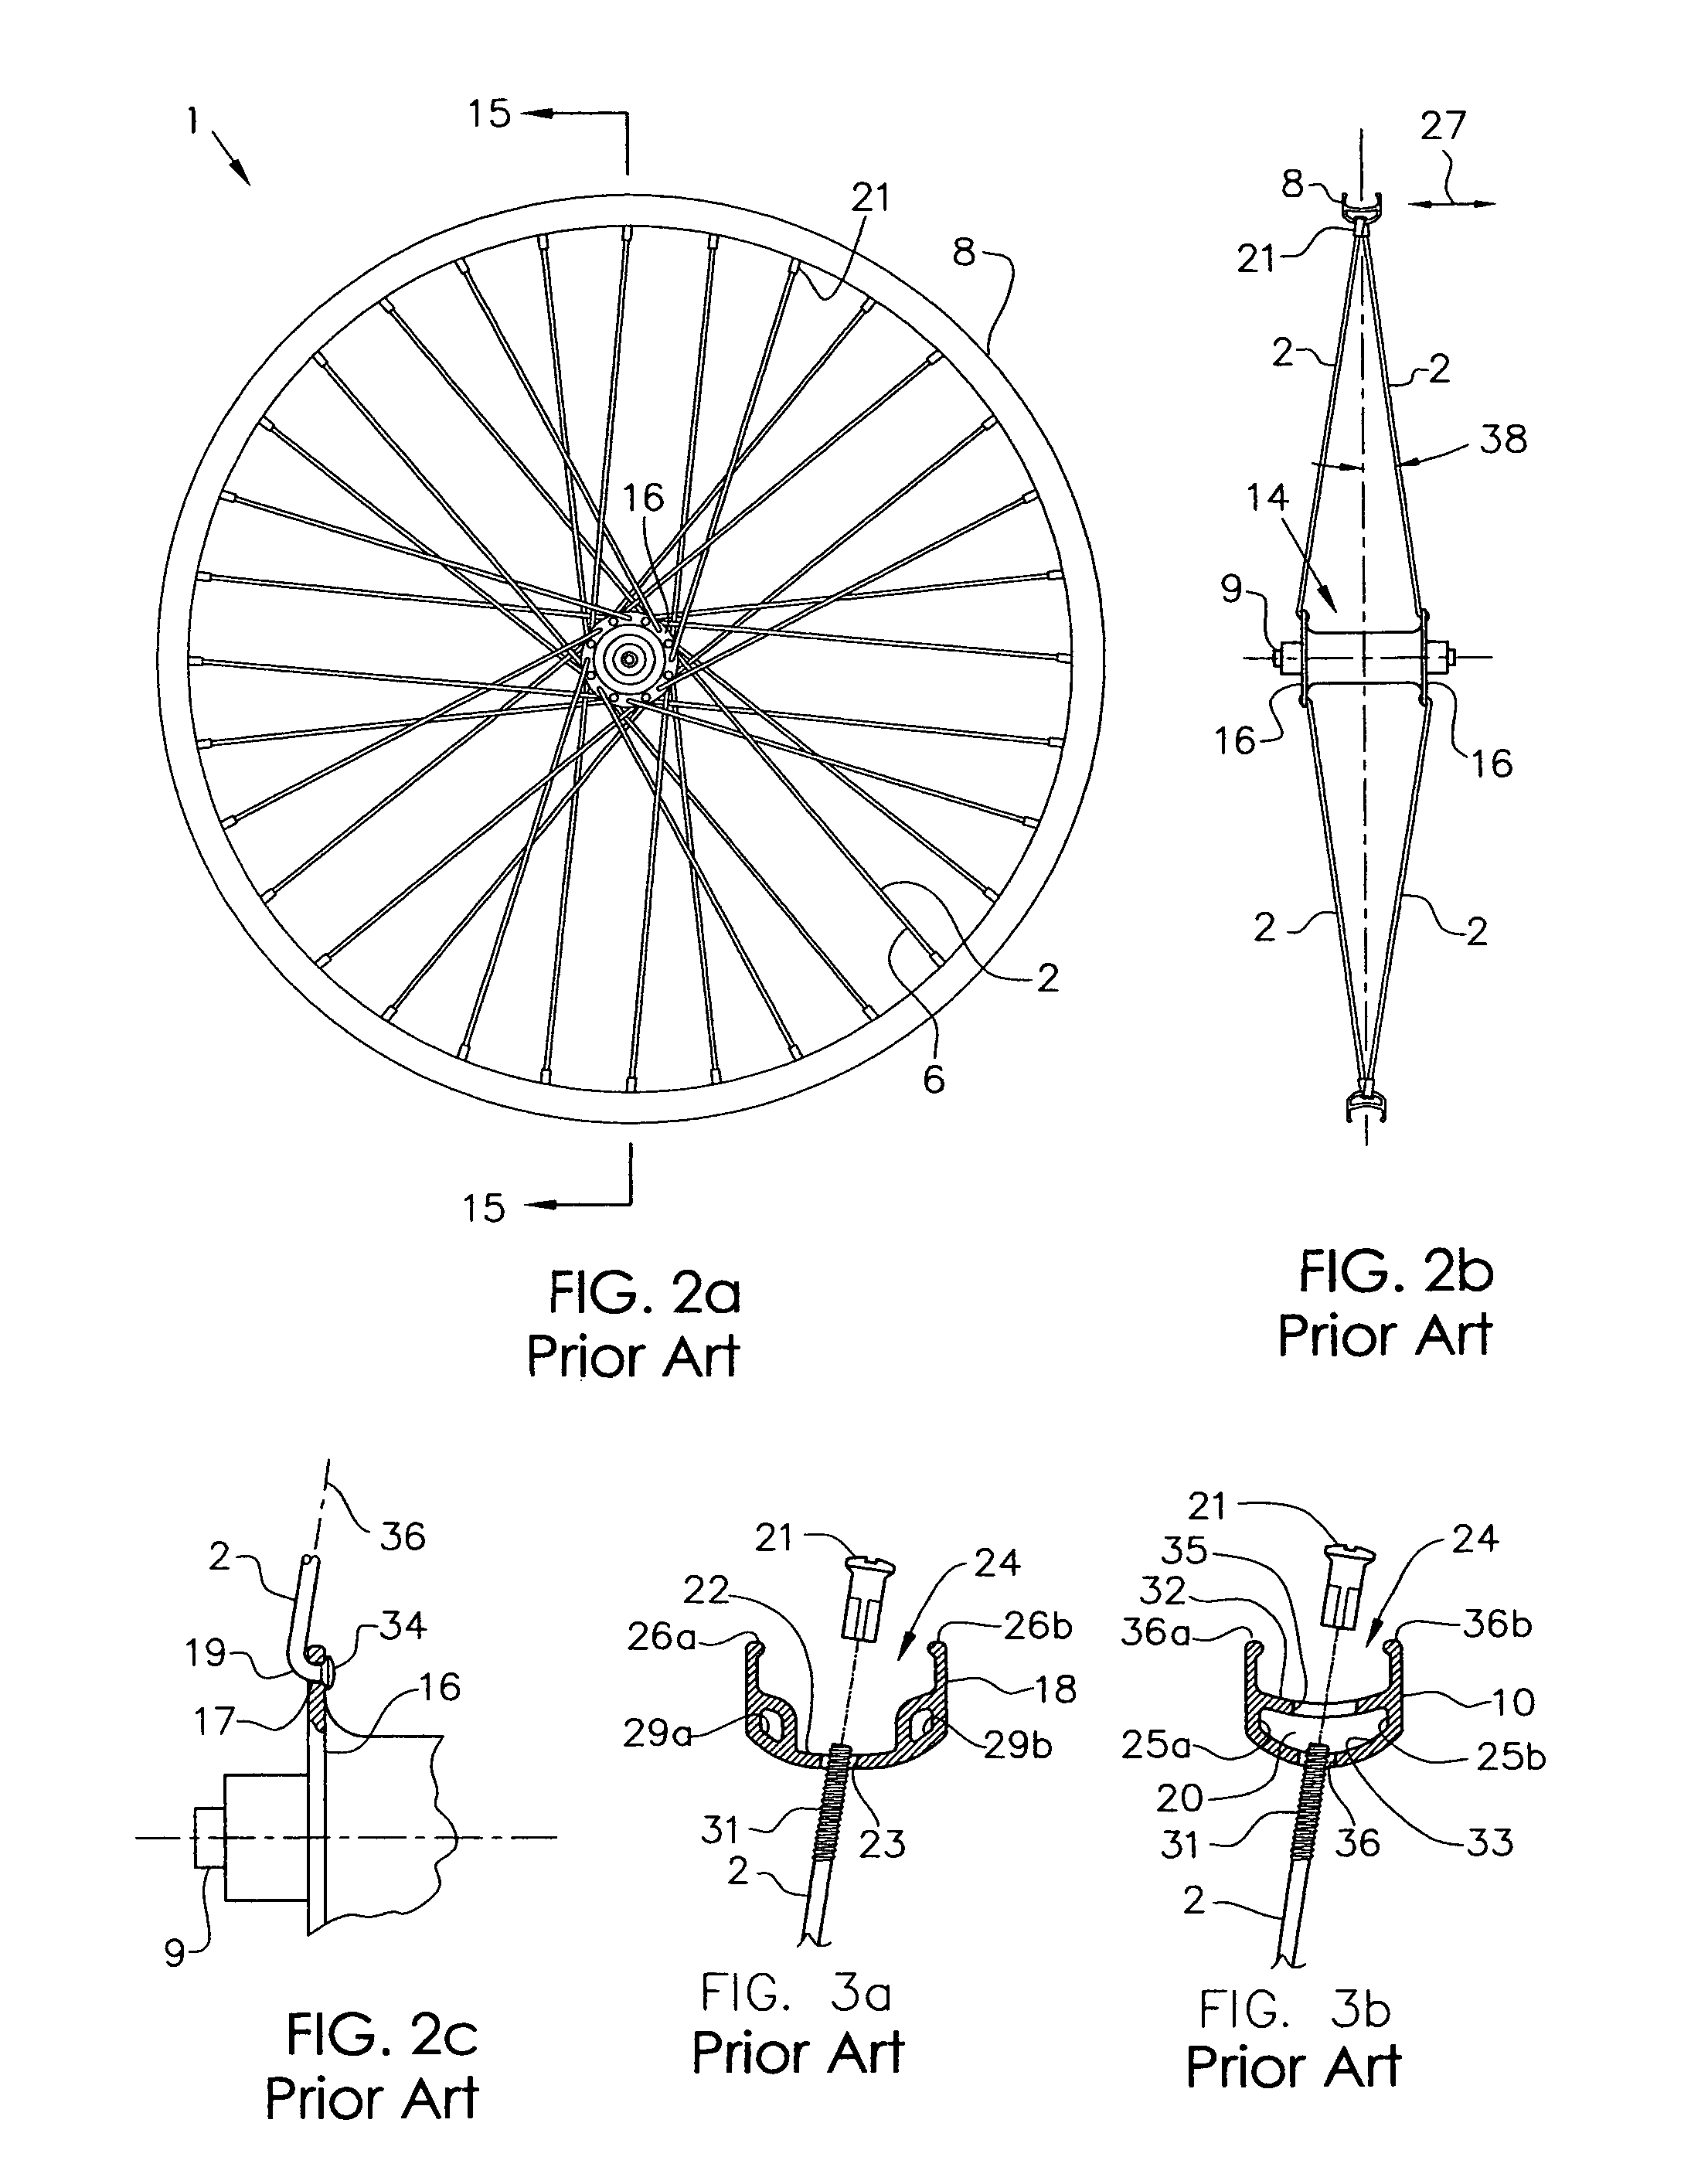 Vehicle wheel spoke connection